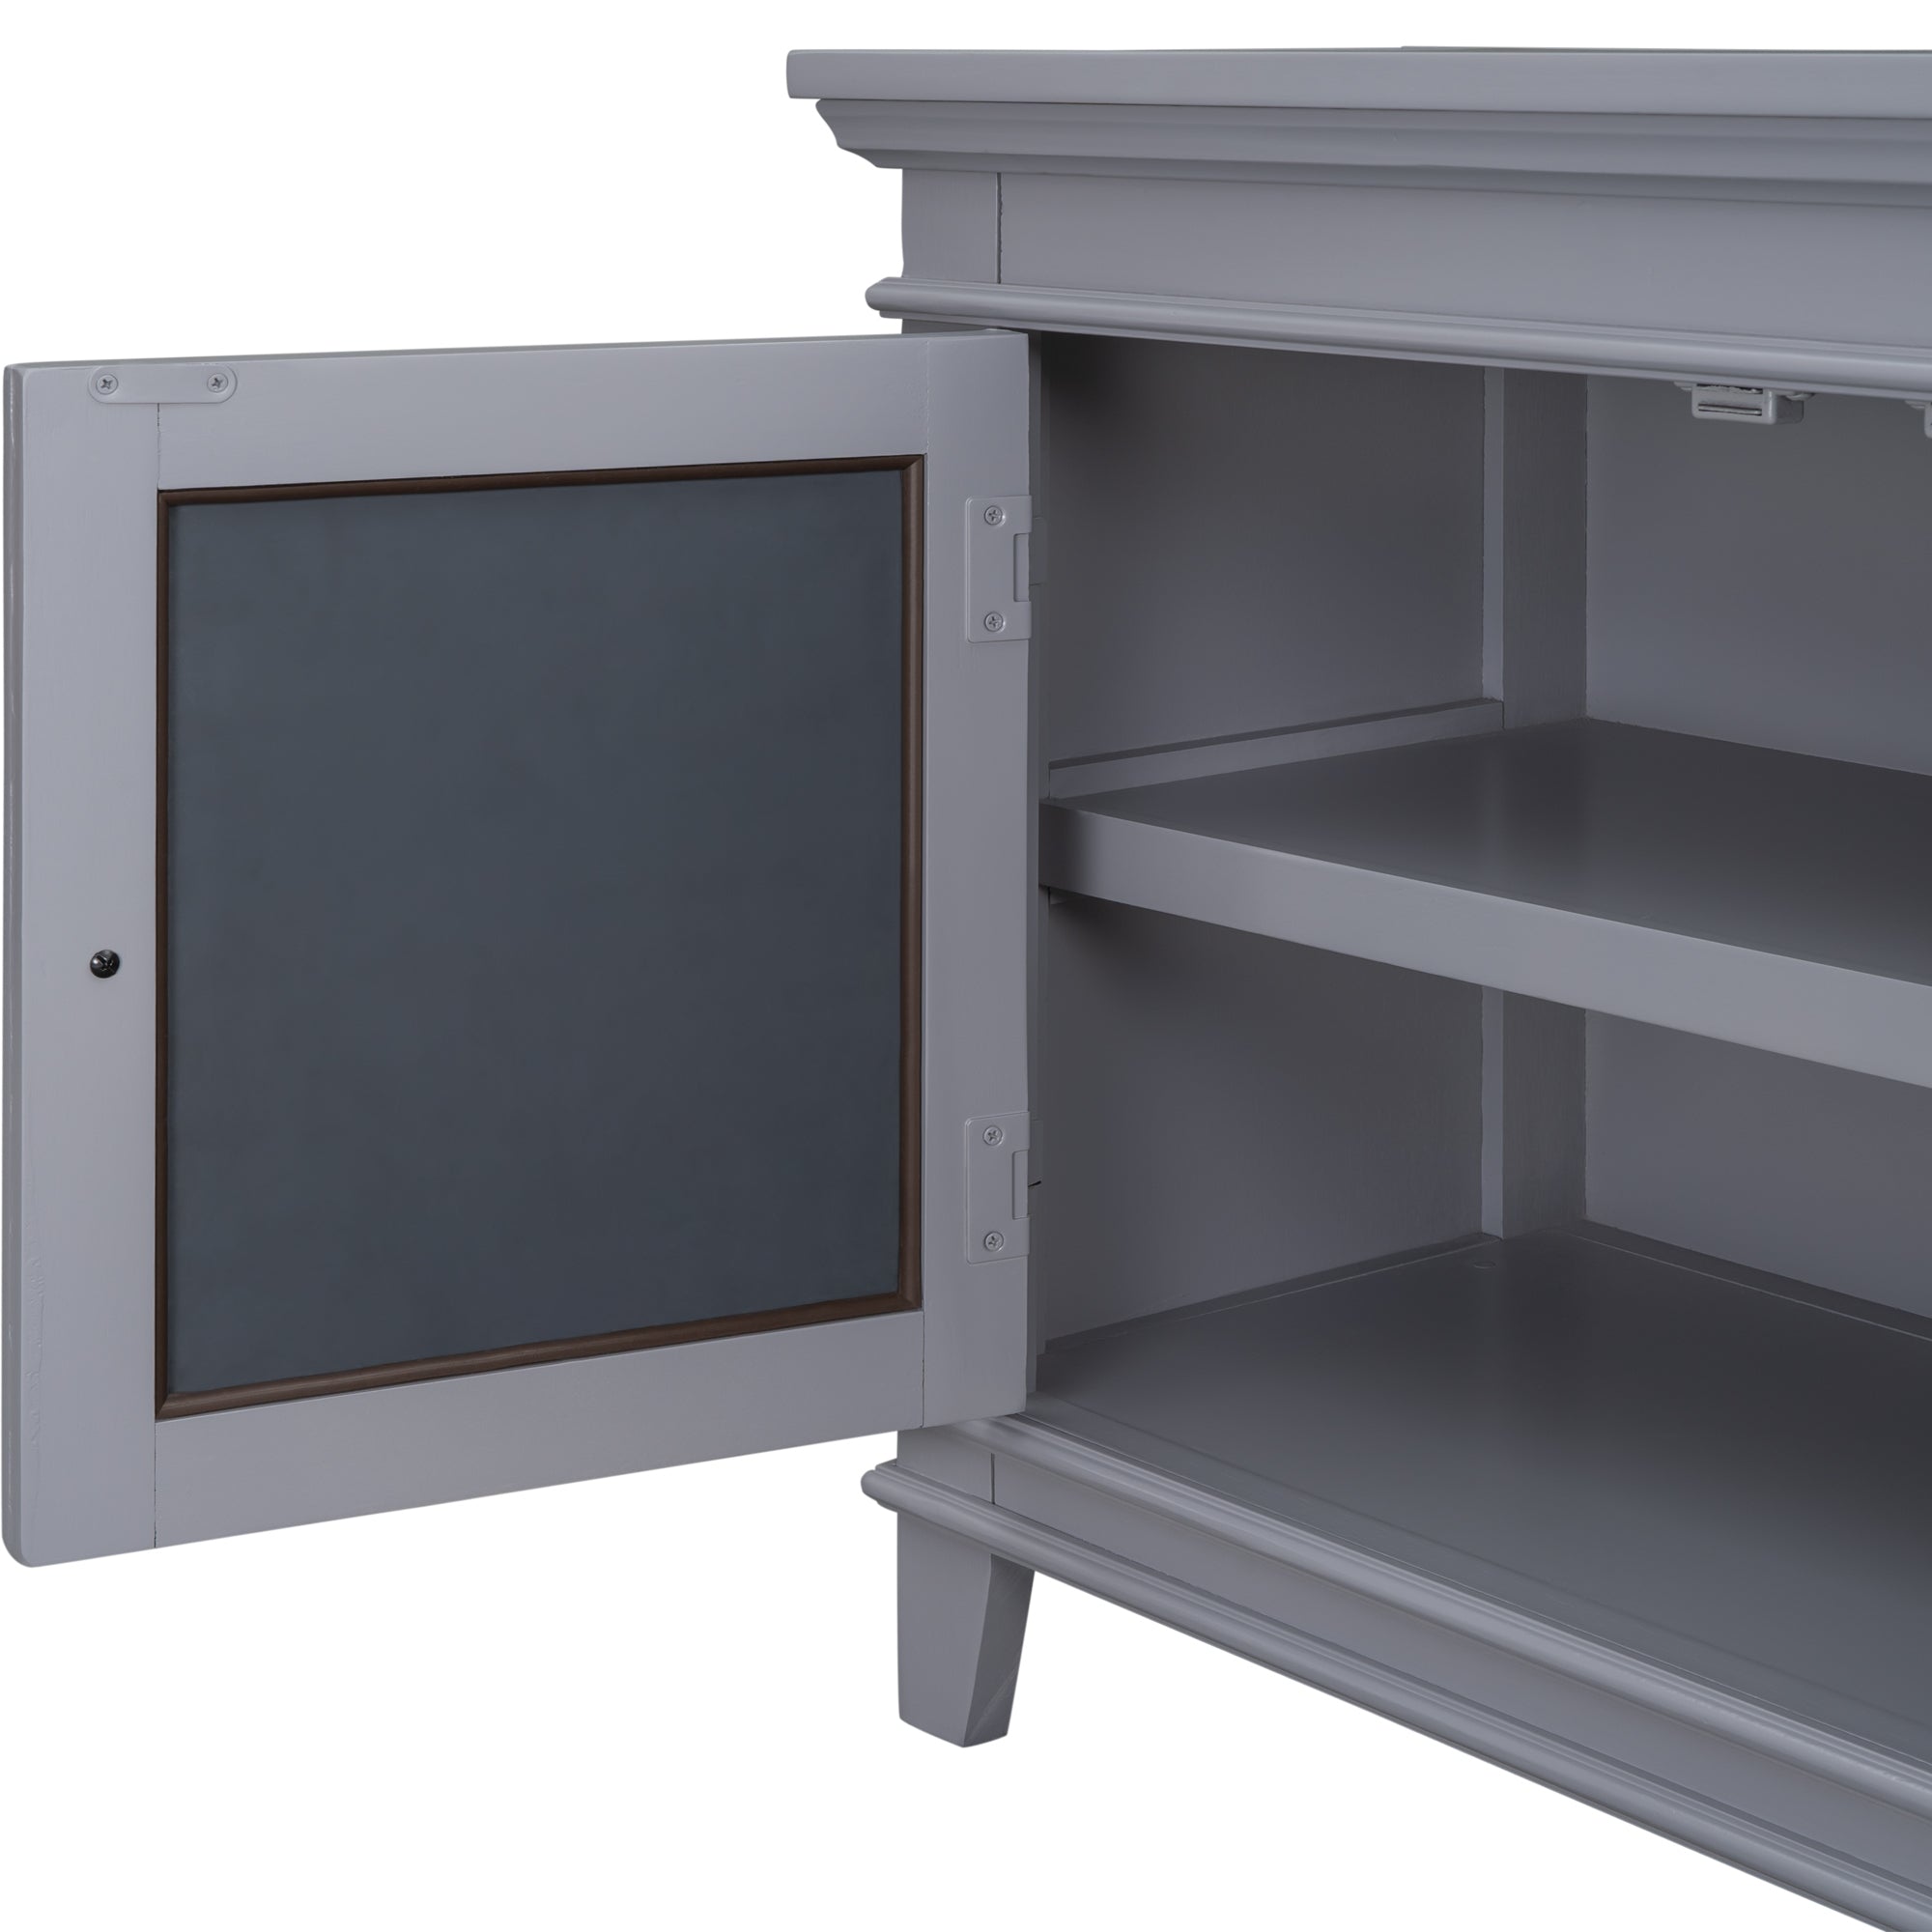 Accent Storage Cabinet Wooden Cabinet with Decorative Mirror Door (Gray)